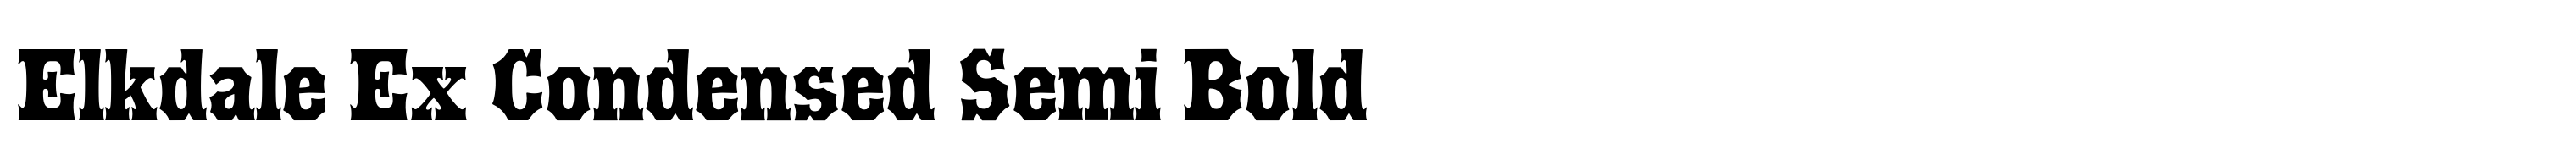 Elkdale Ex Condensed Semi Bold